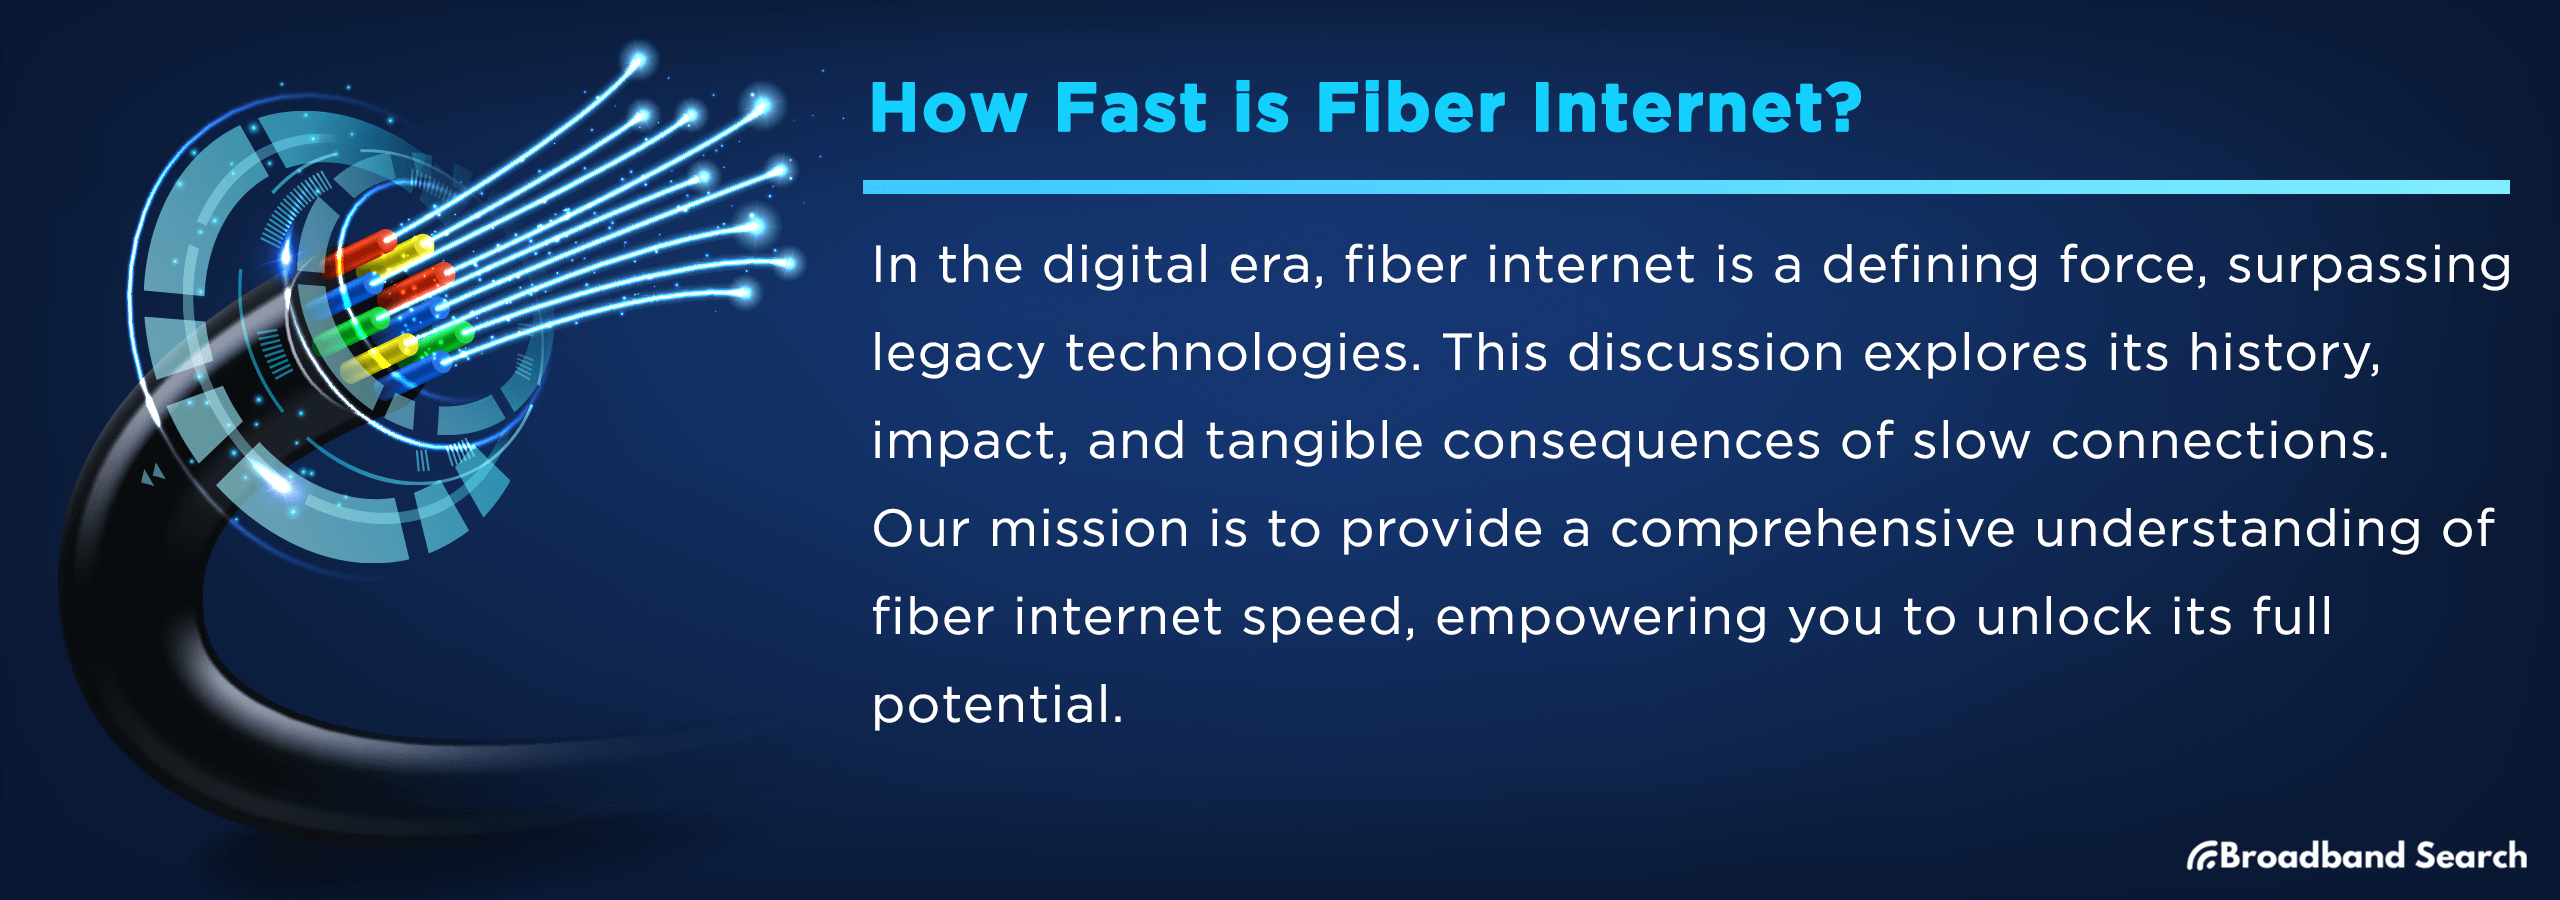 How Fast is Fiber Internet? - BroadbandSearch